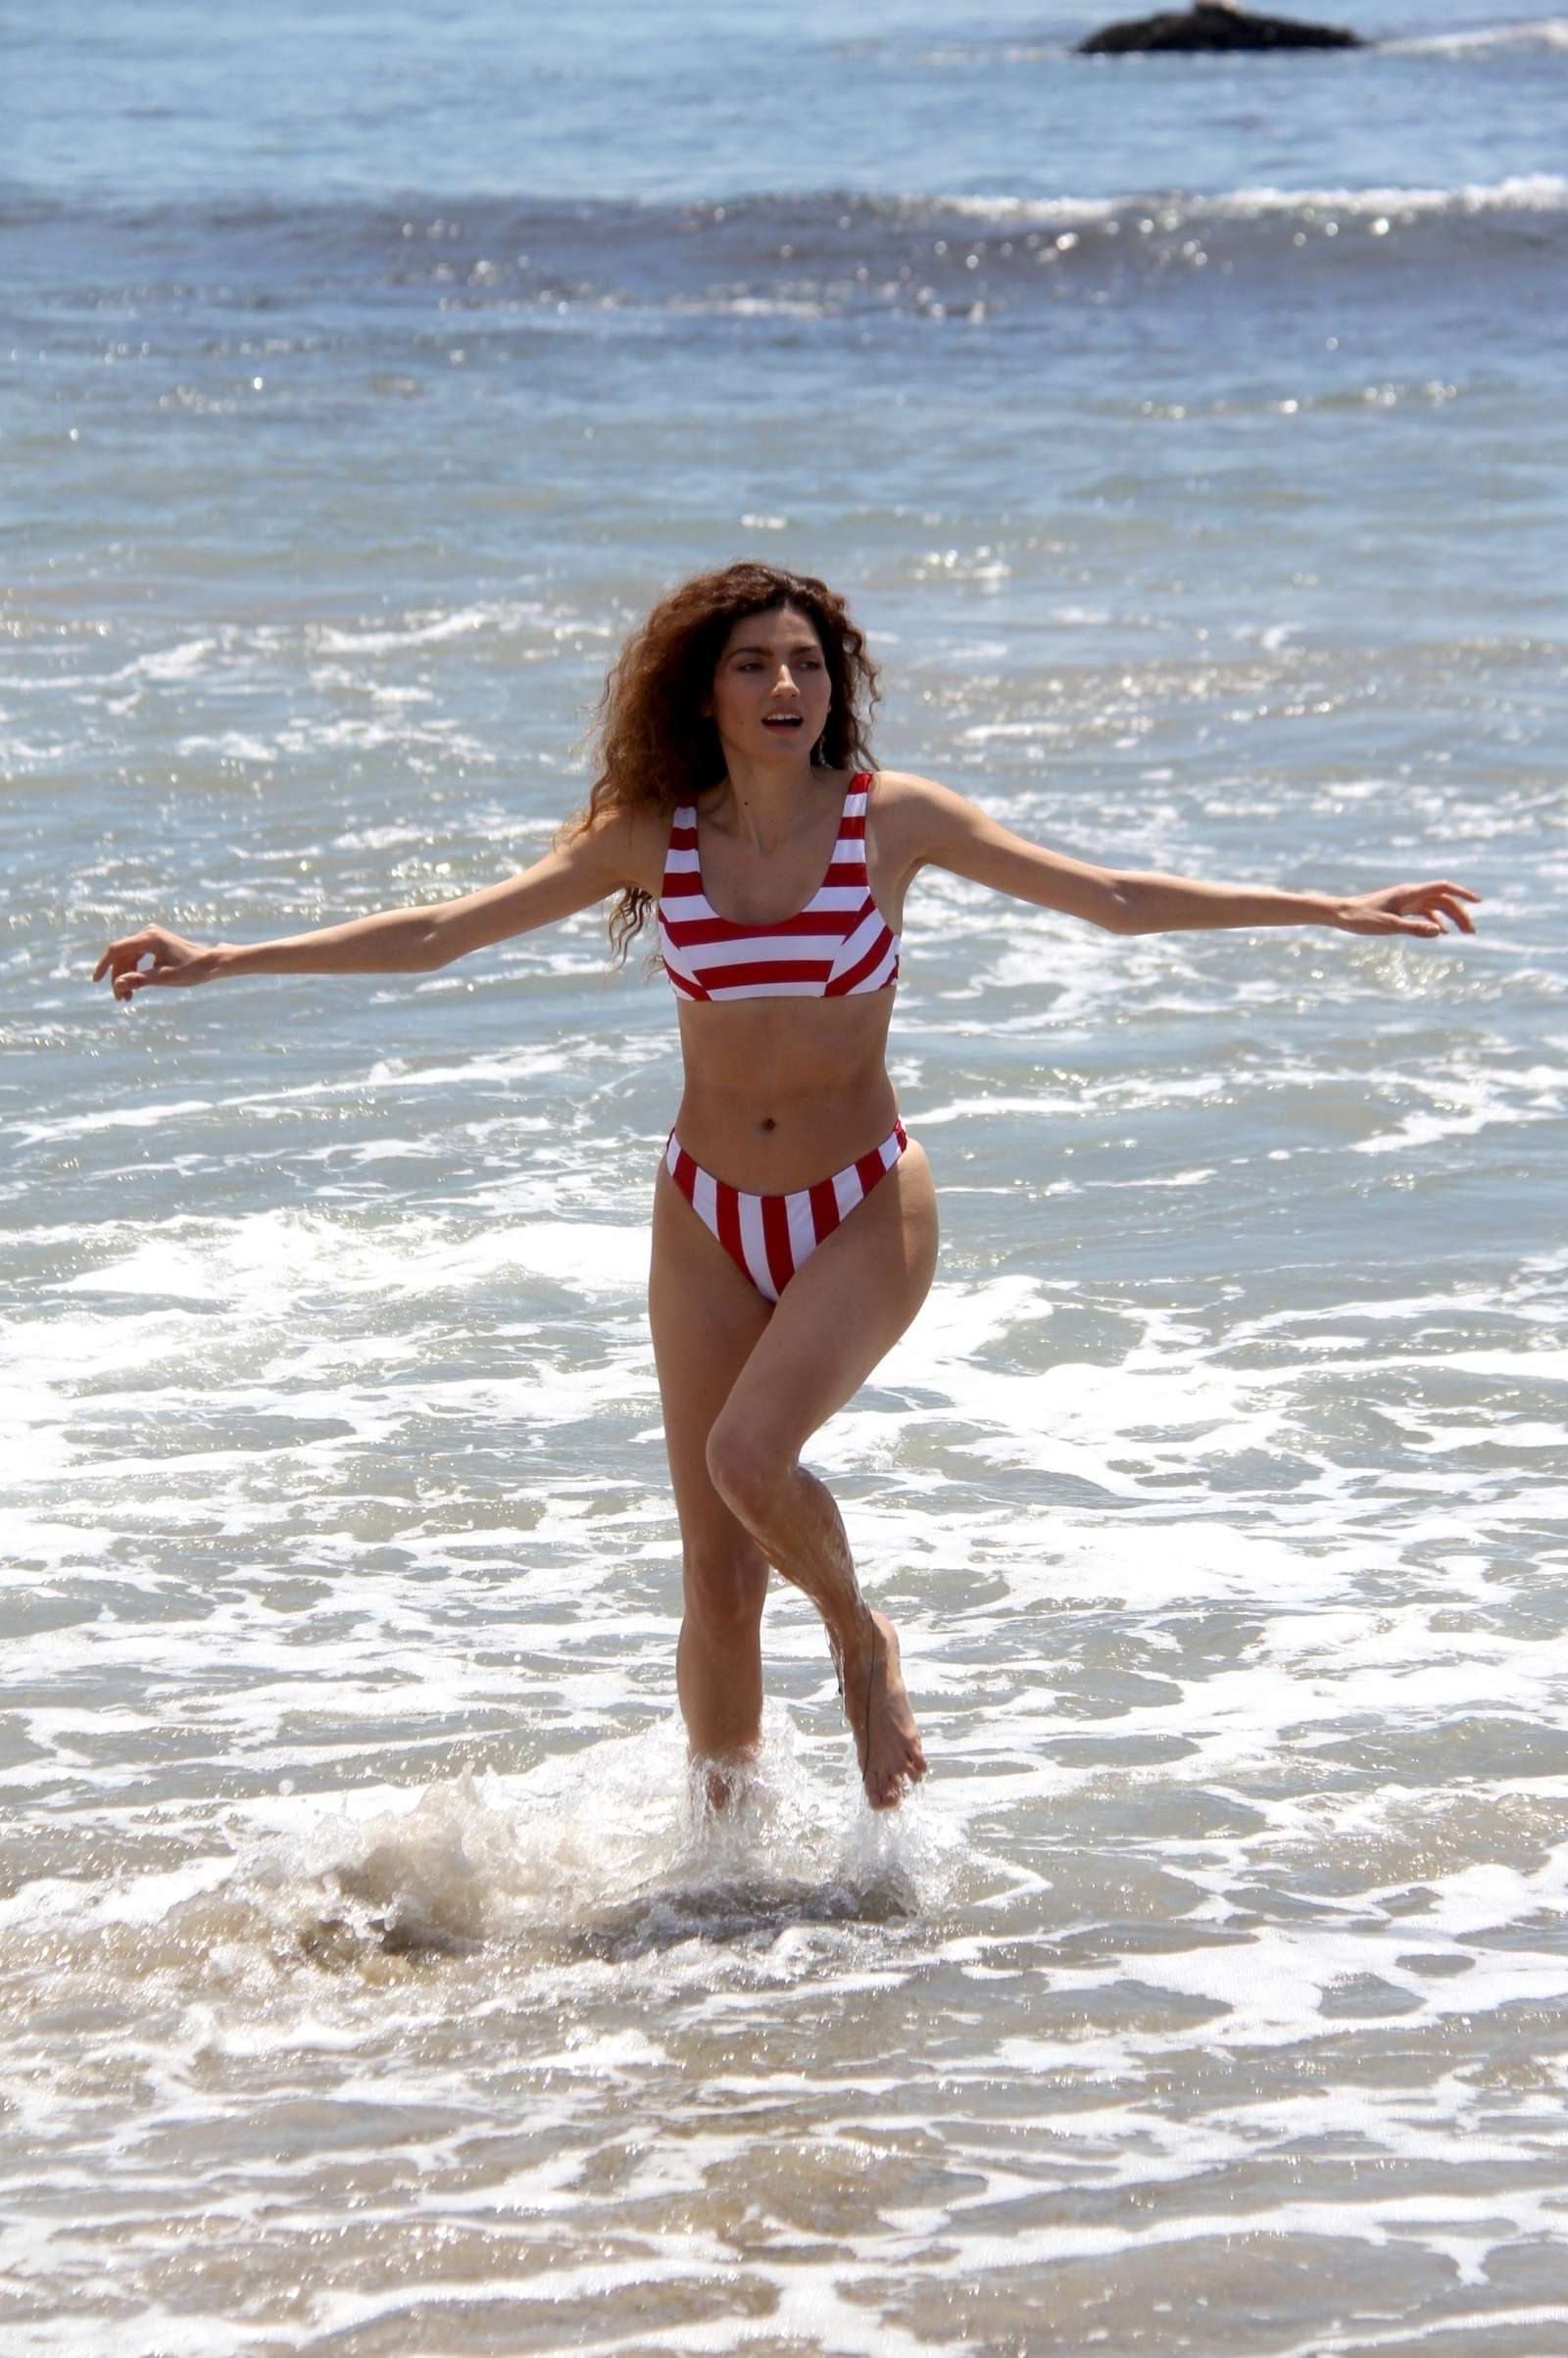 Blanca Blanco in Red and White Bikini at the beach in Malibu